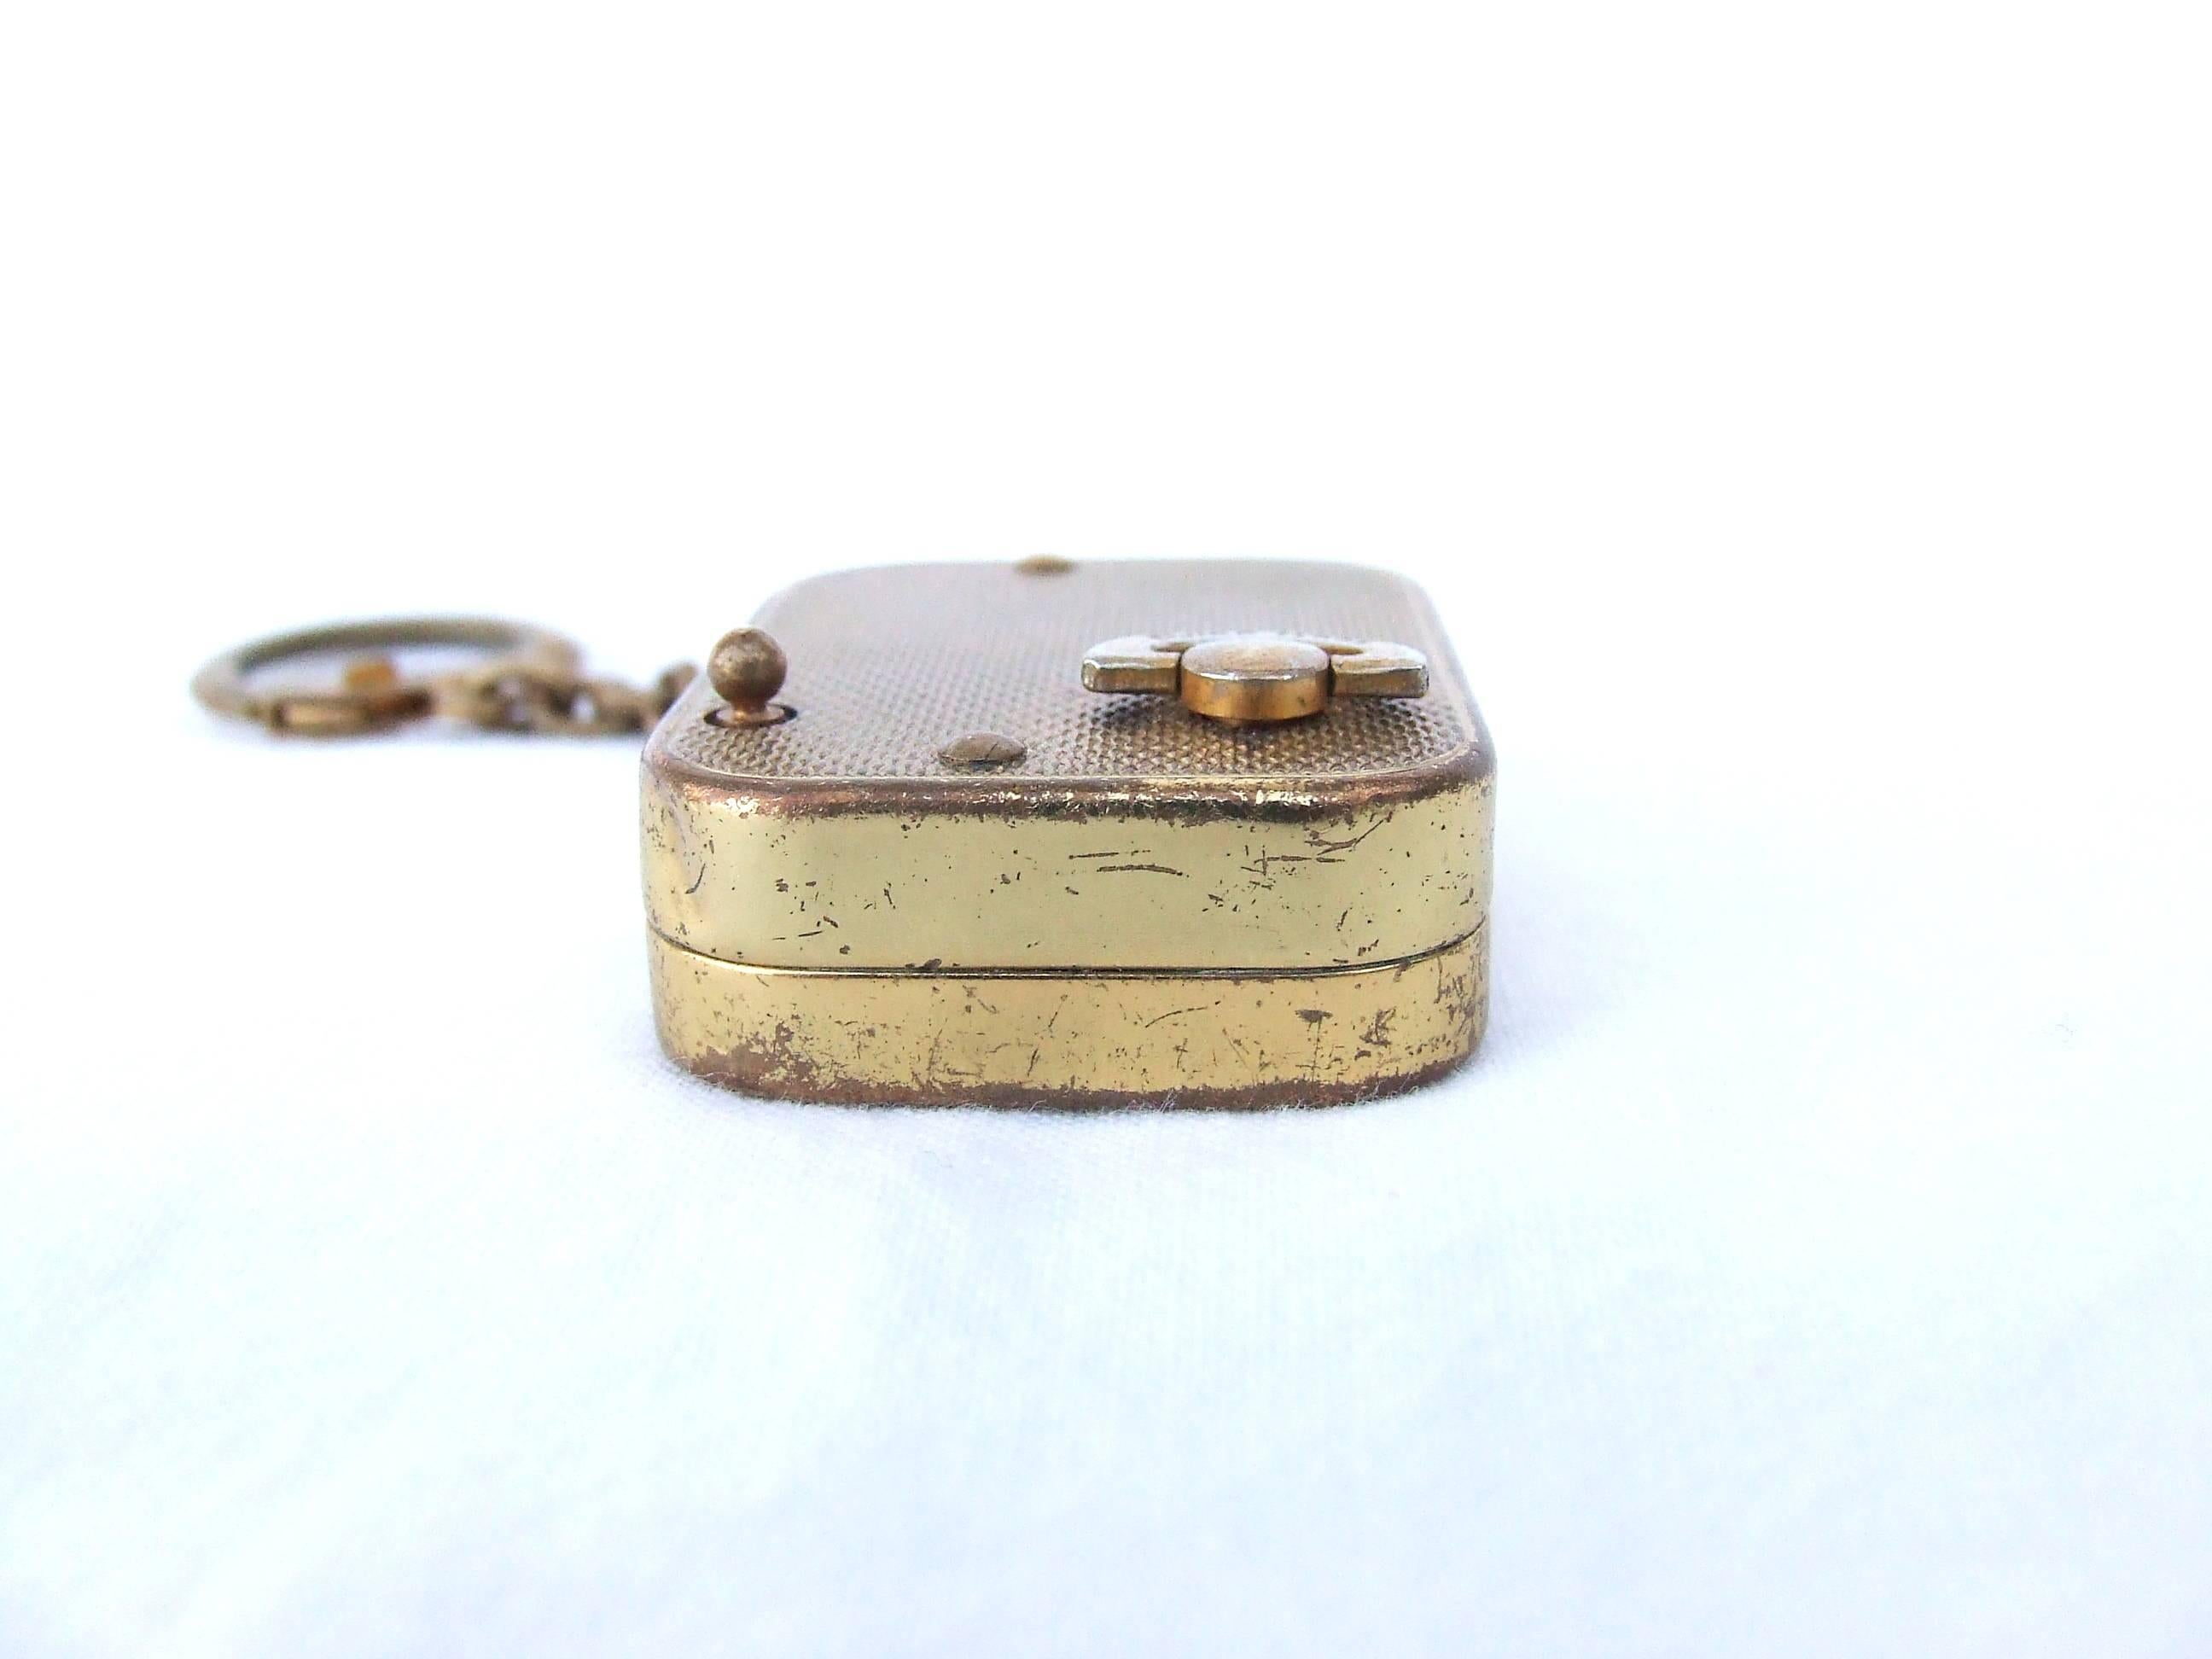 Women's or Men's Hermes Keychain Key Ring Key Holder Music Box Collector Golden Metal